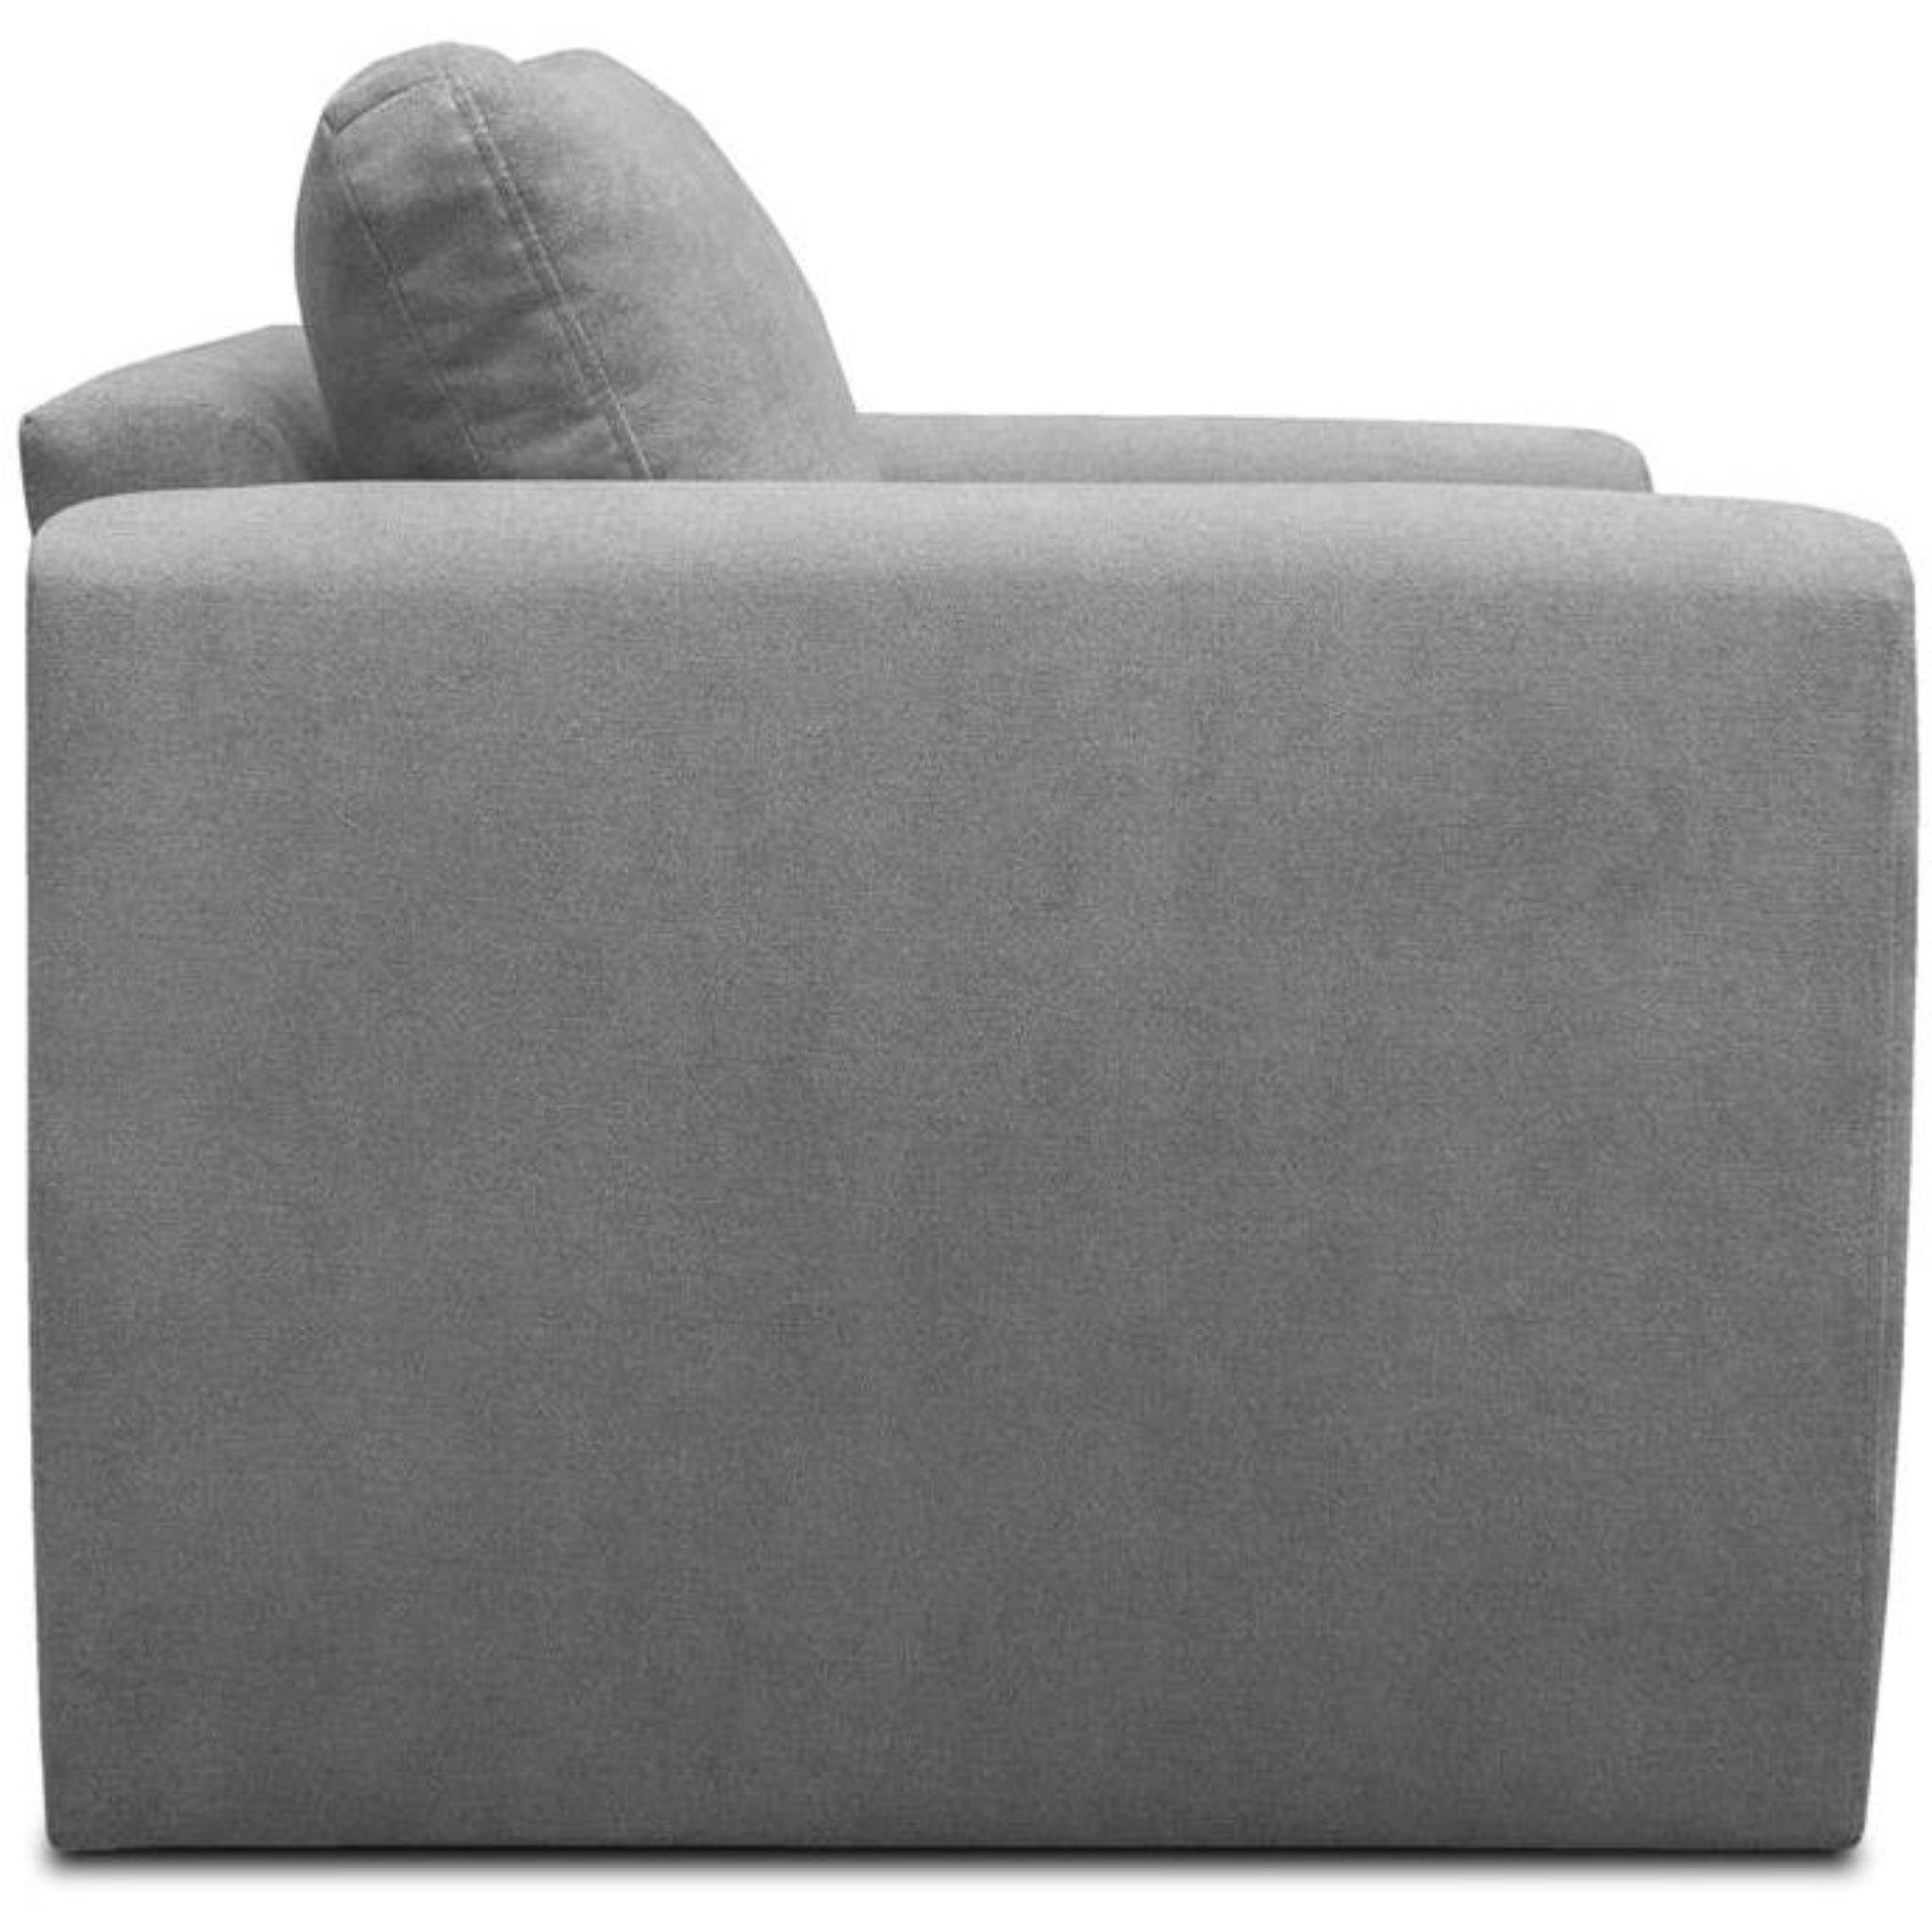 Kamel 1-Sitzer mit Bettkasten, Polstersessel Dunkelgrau Schlaffunktion, (alfa Beautysofa Sofa, Wohnzimmersessel), (Modern Relaxsessel 19)